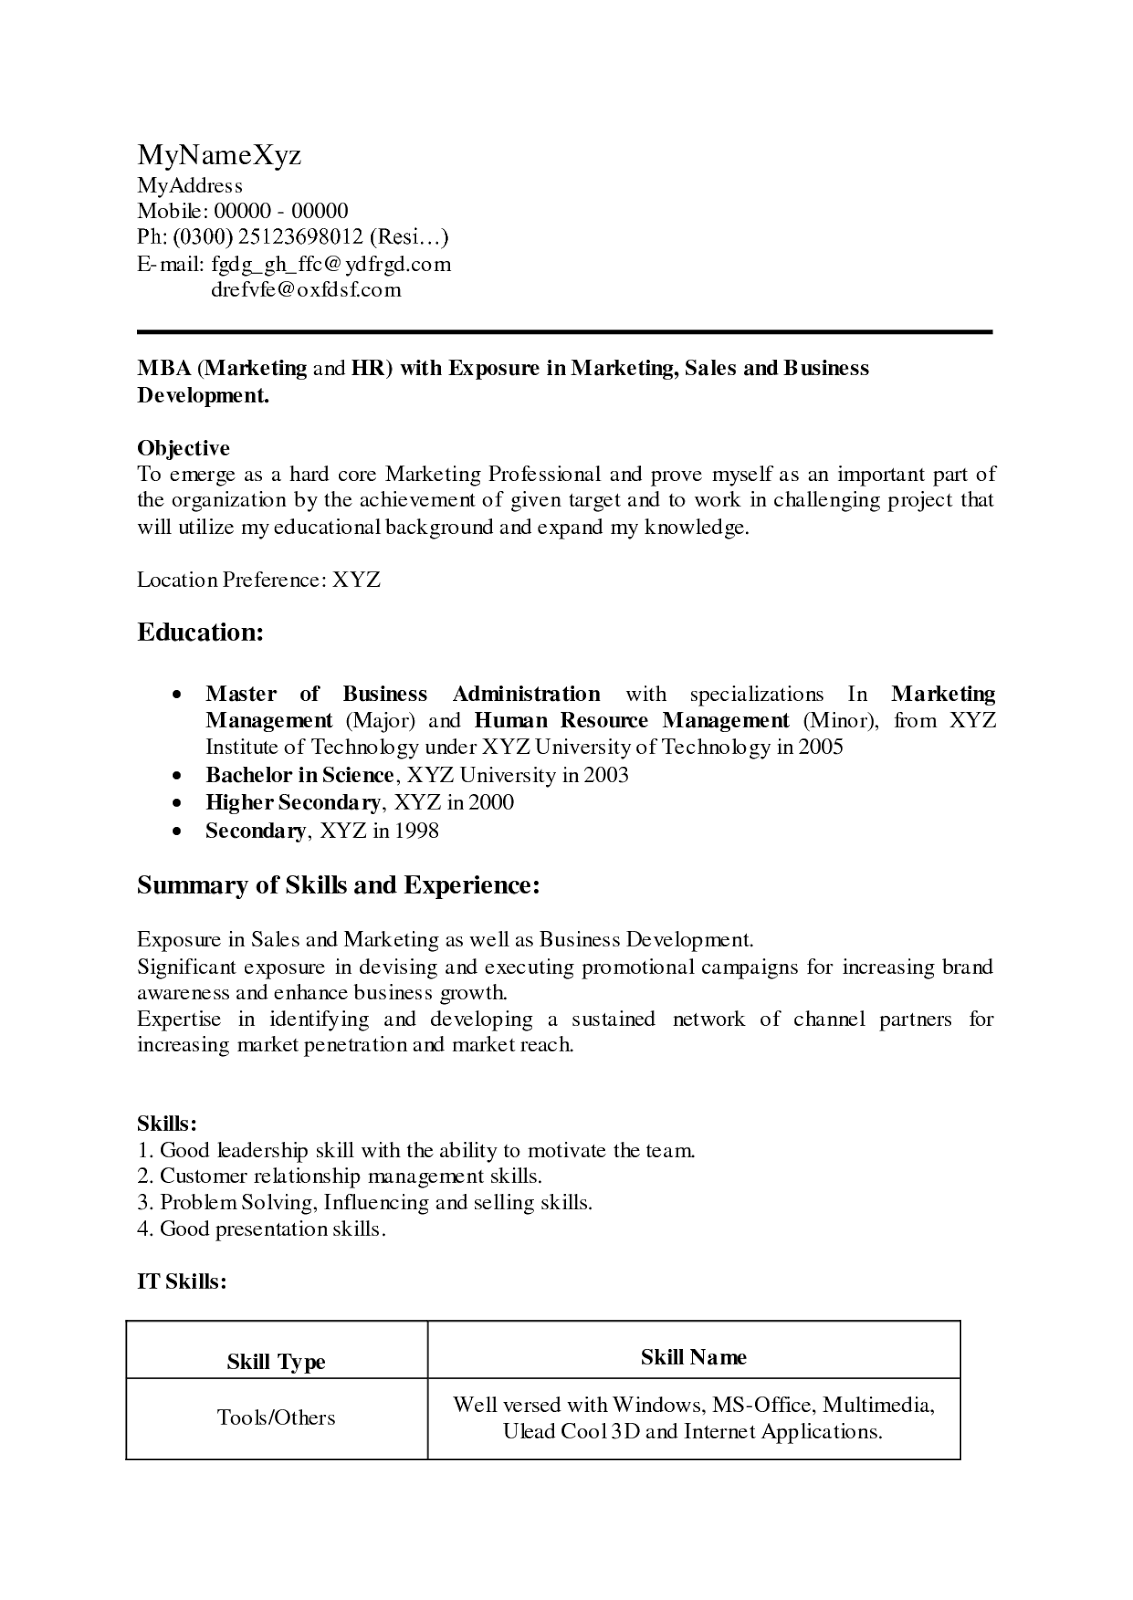 mba fresher resume - Scribd india